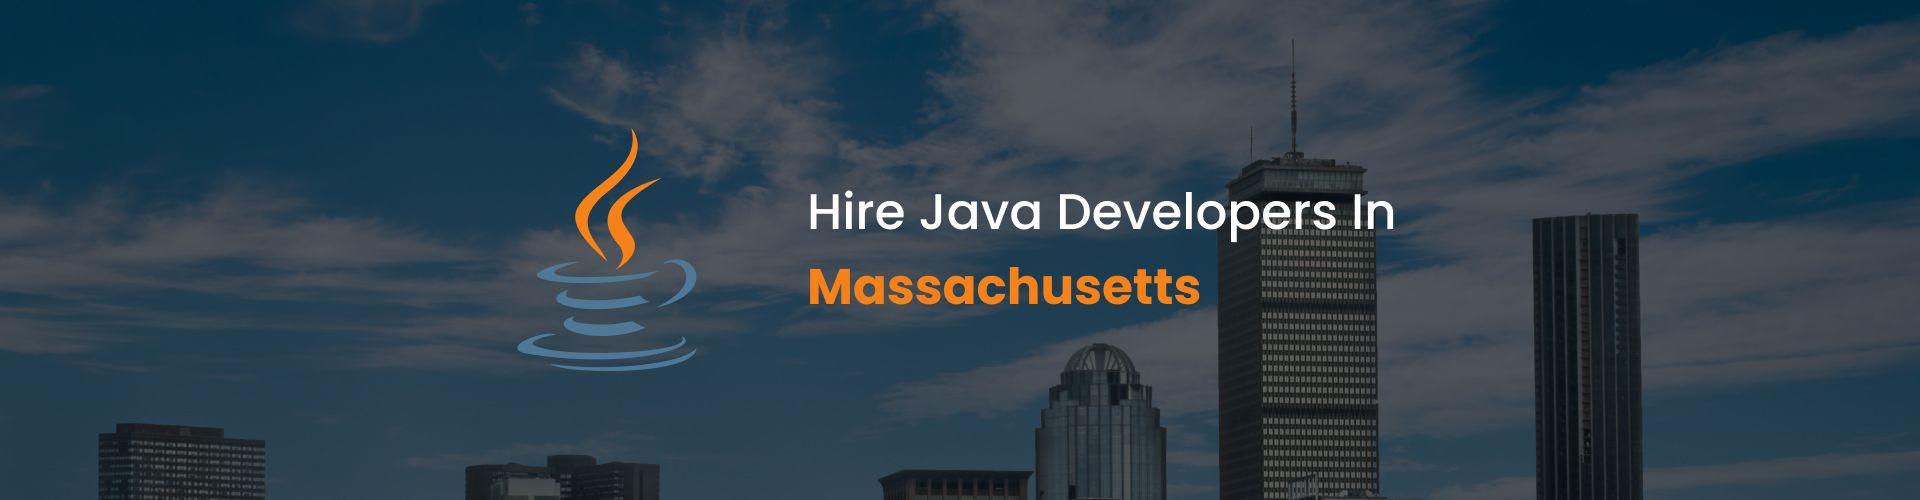 hire java developers in massachusetts